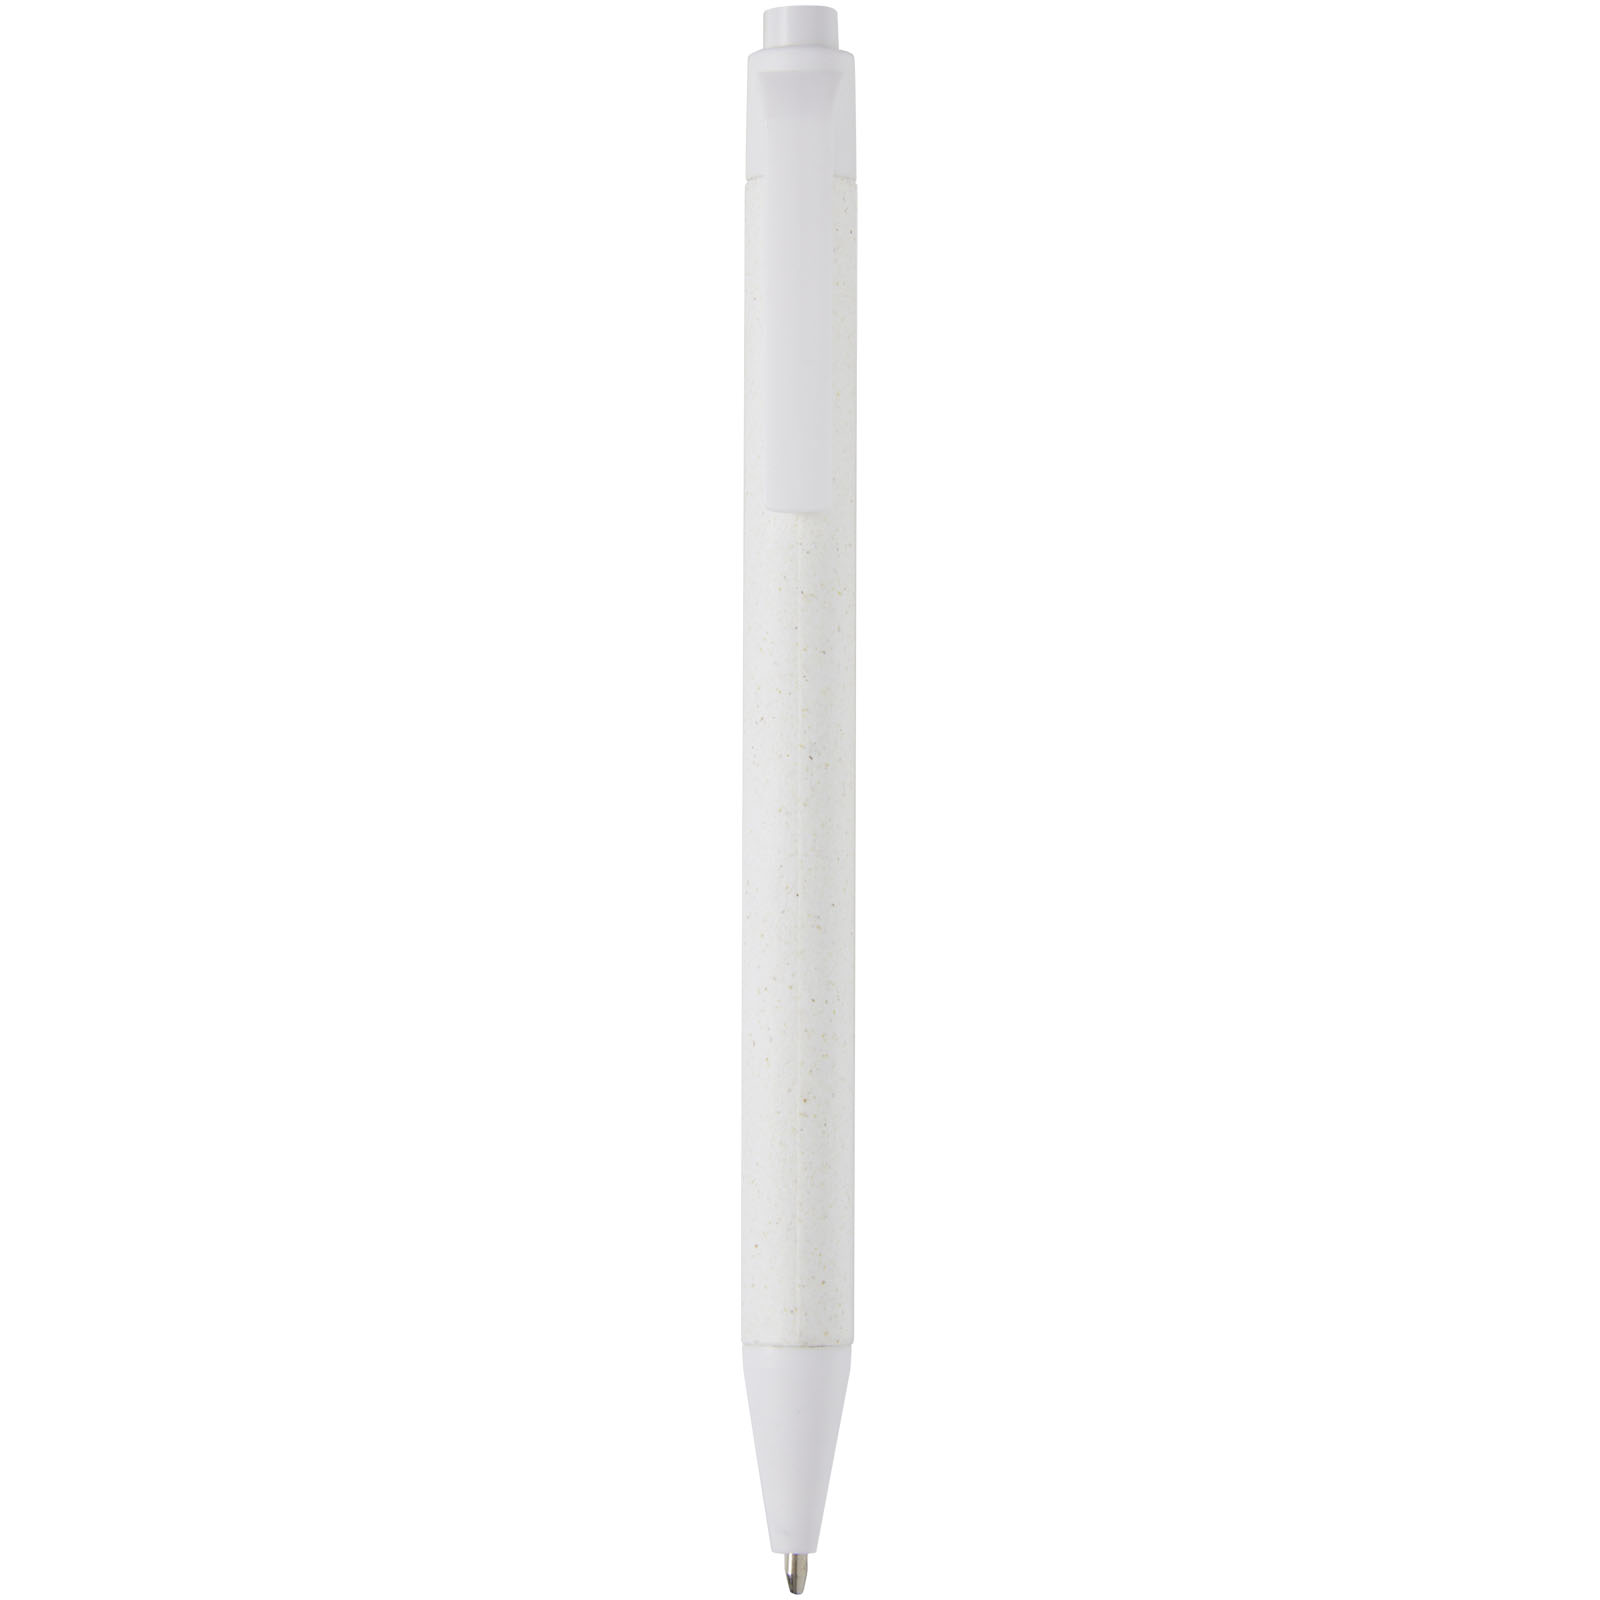 Advertising Ballpoint Pens - Fabianna crush paper ballpoint pen